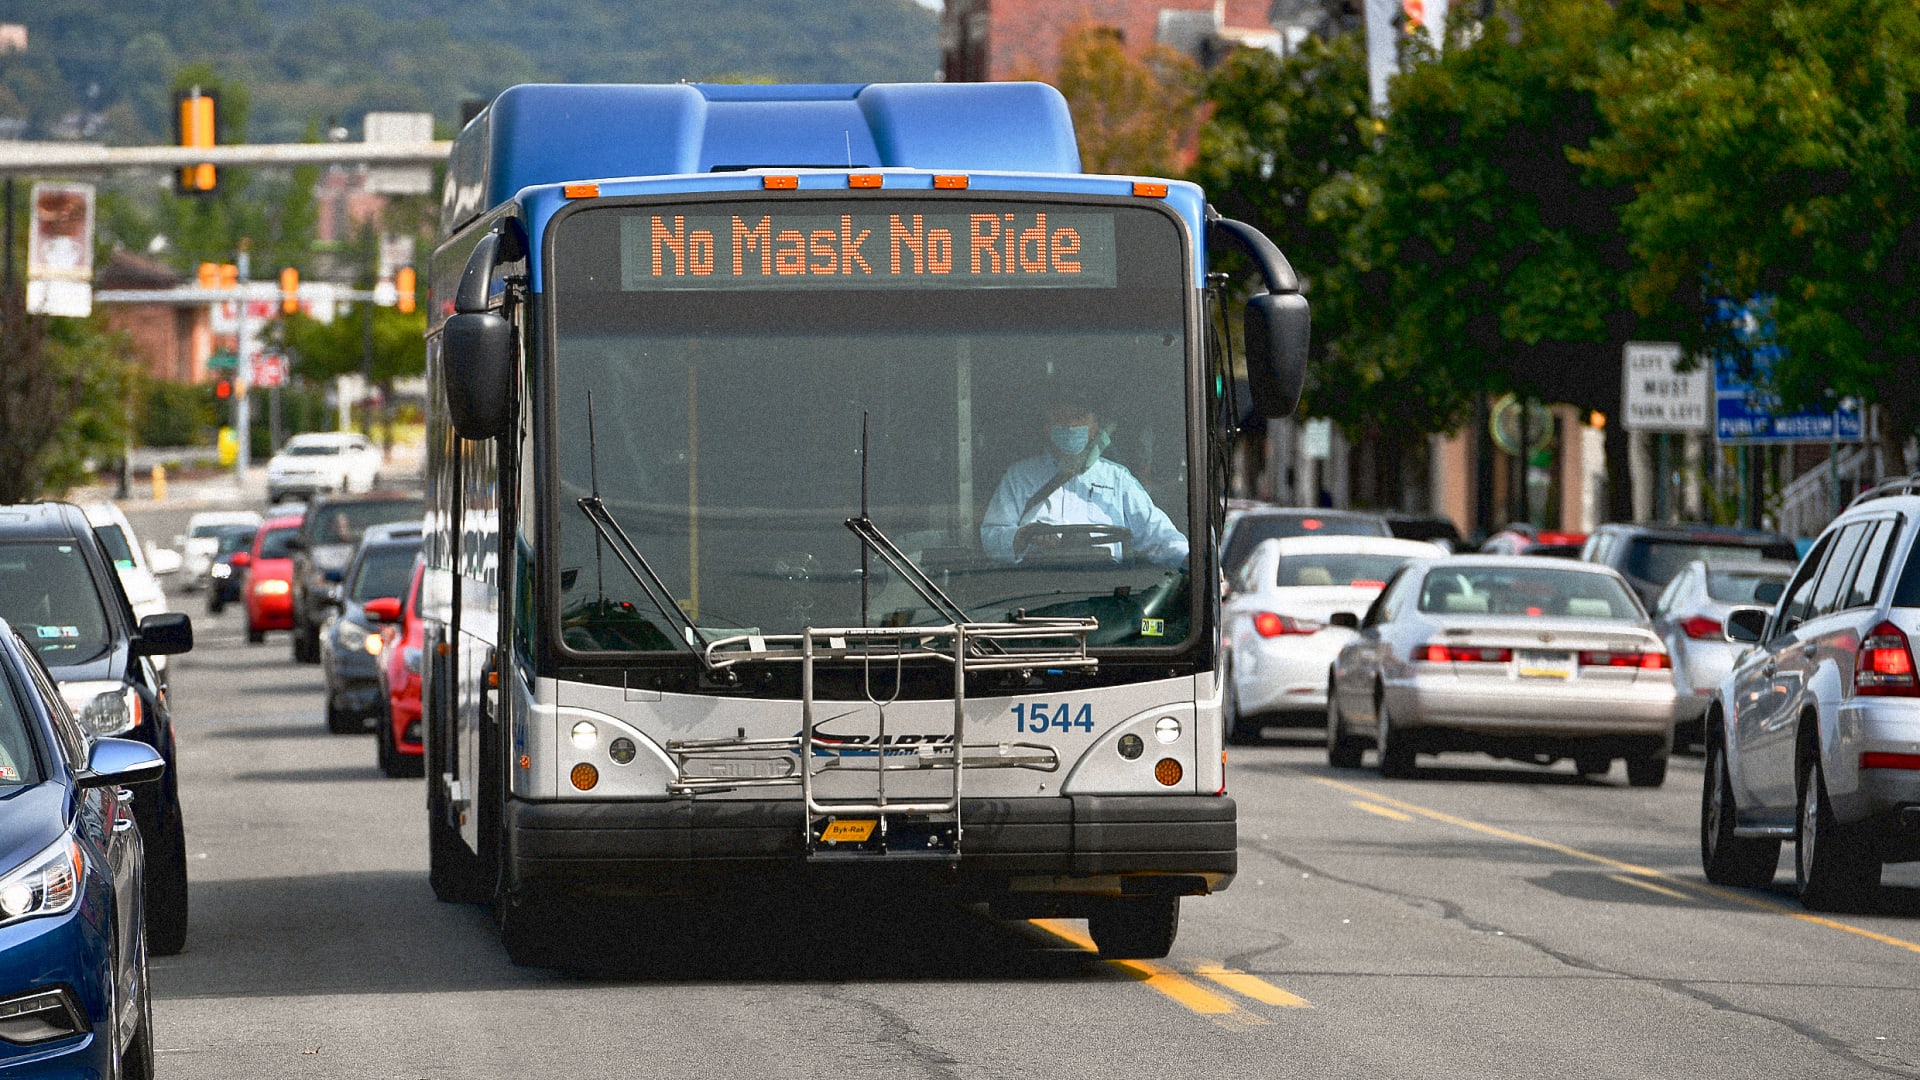 Public transit workers are struggling to enforce mask mandates